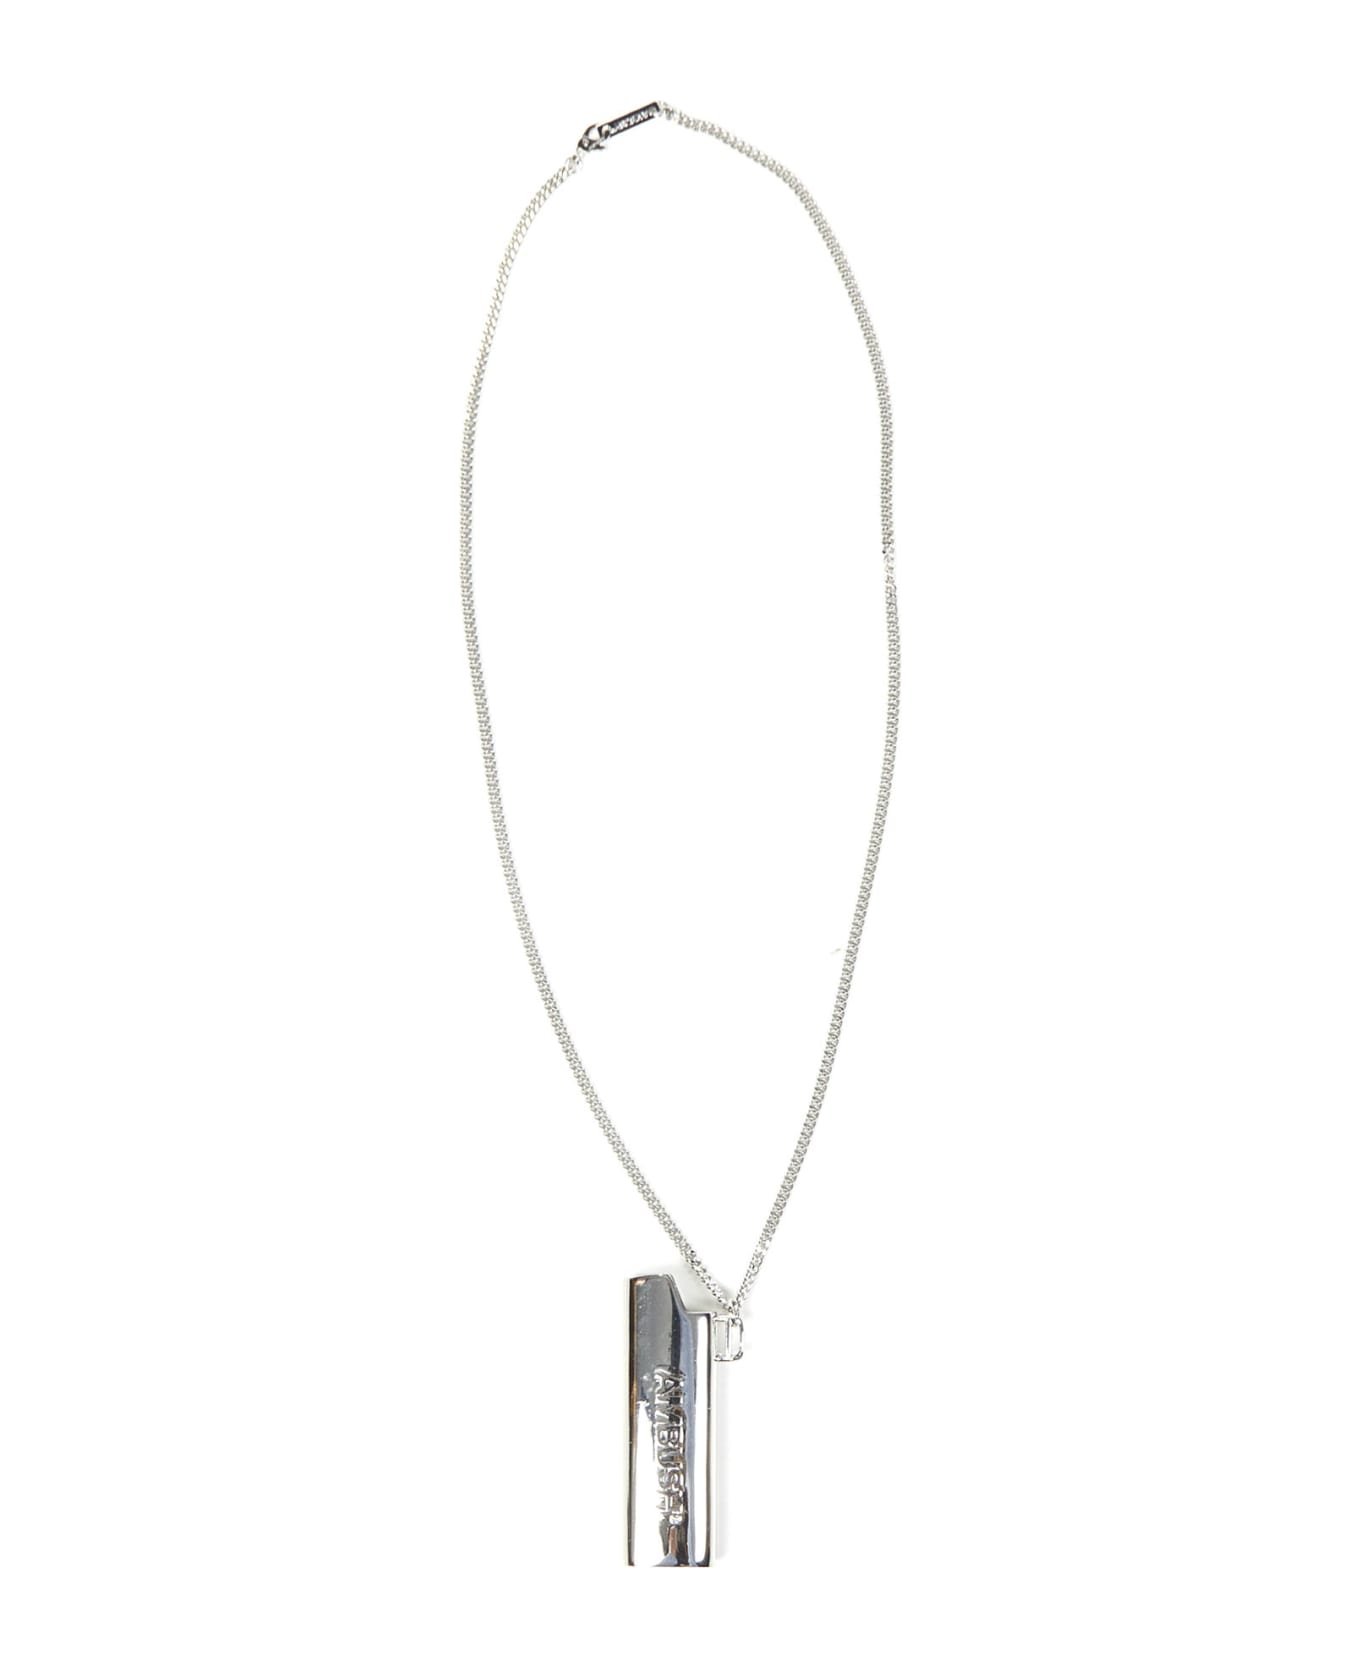 AMBUSH Lighter Case Necklace - Silver